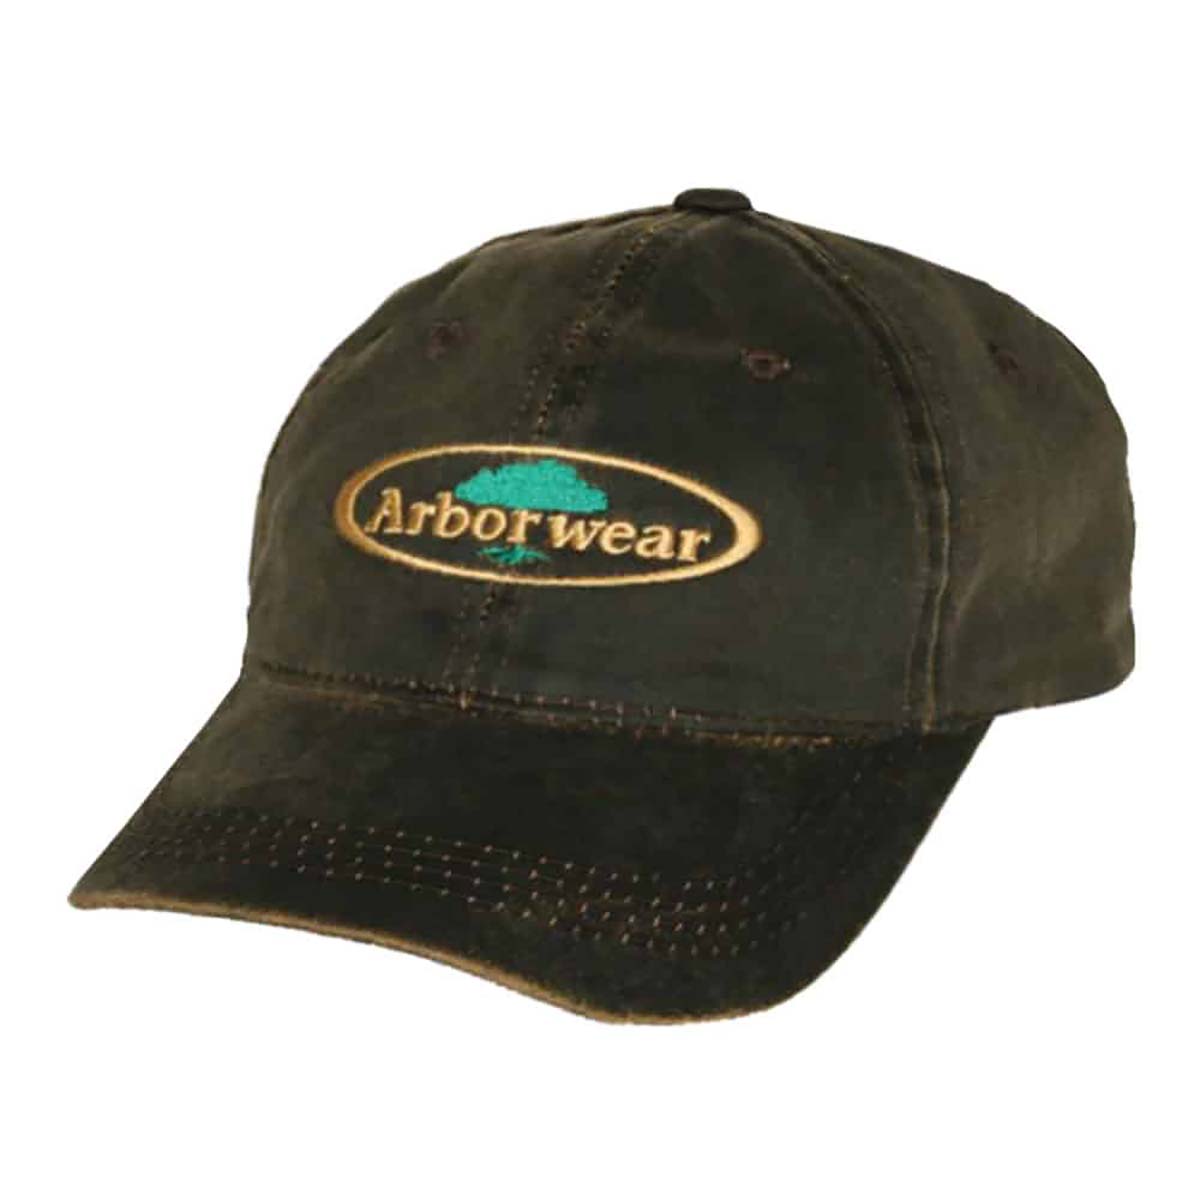 Arborwear Oval Vintage Ball Cap